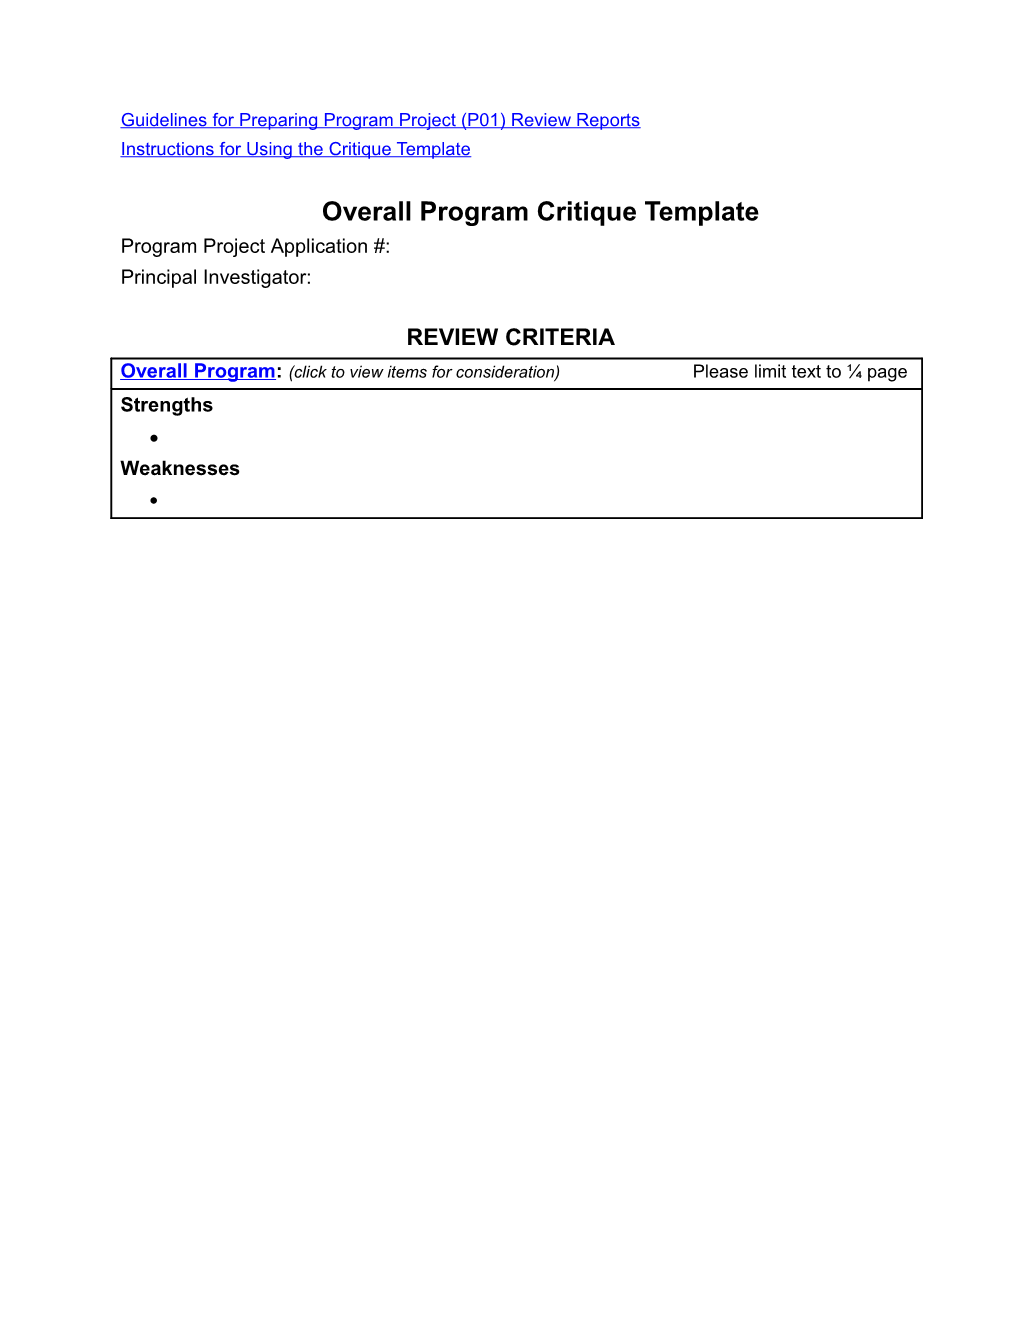 Overall Program Critique Template